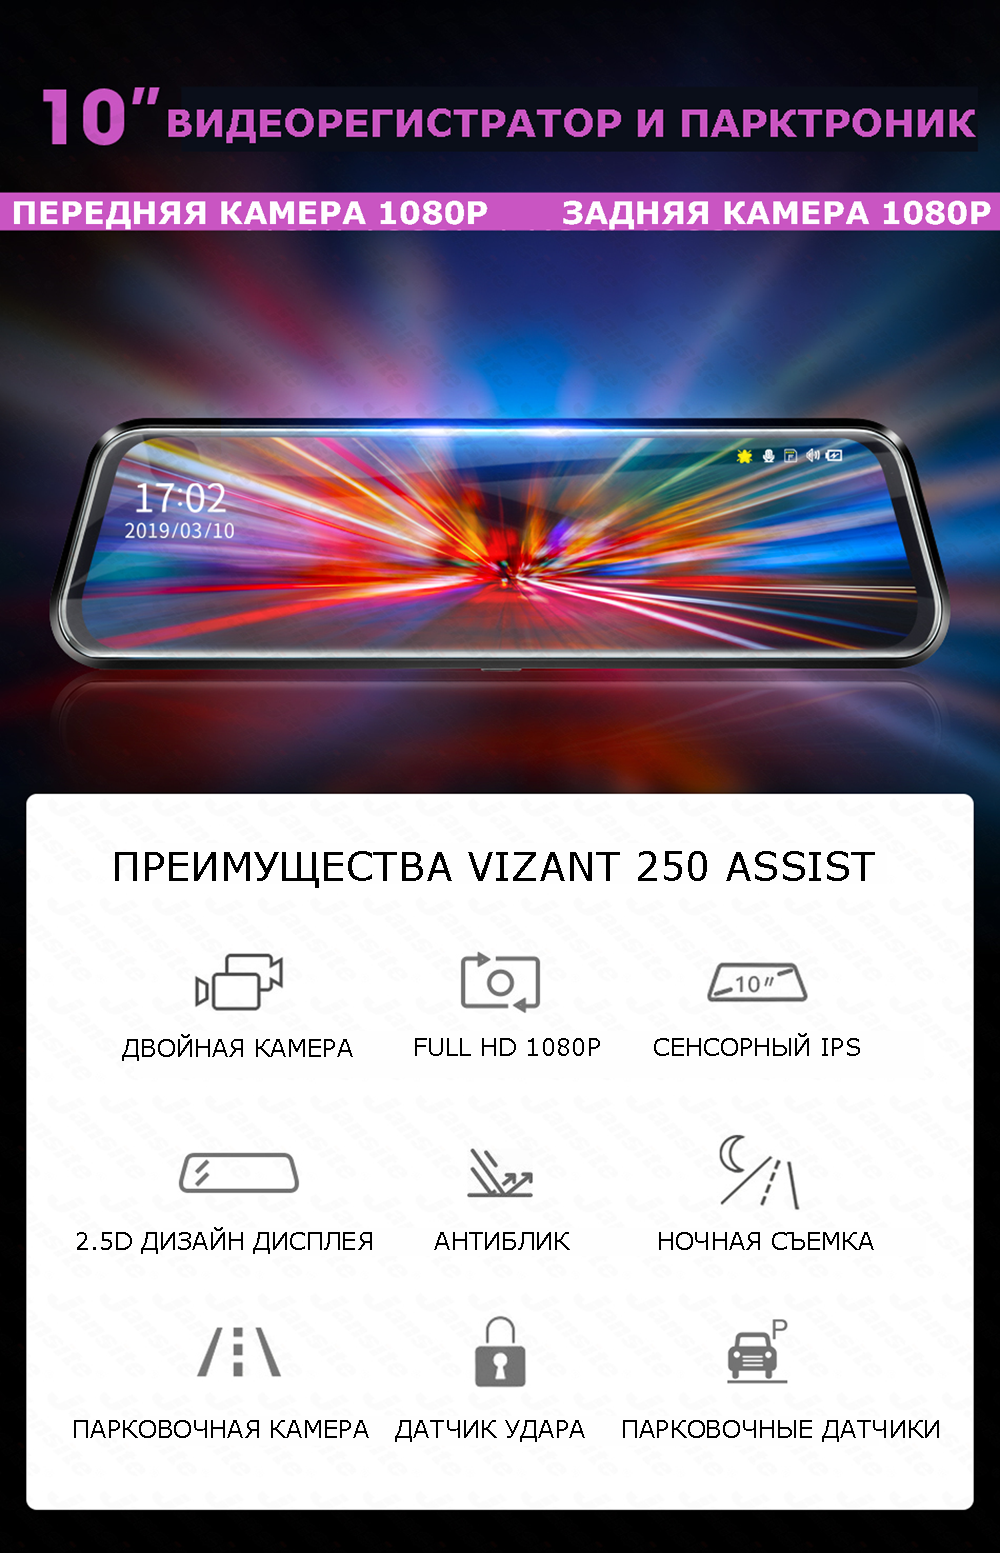  Vizant-250 Assist Full HD 1080P c 2-    